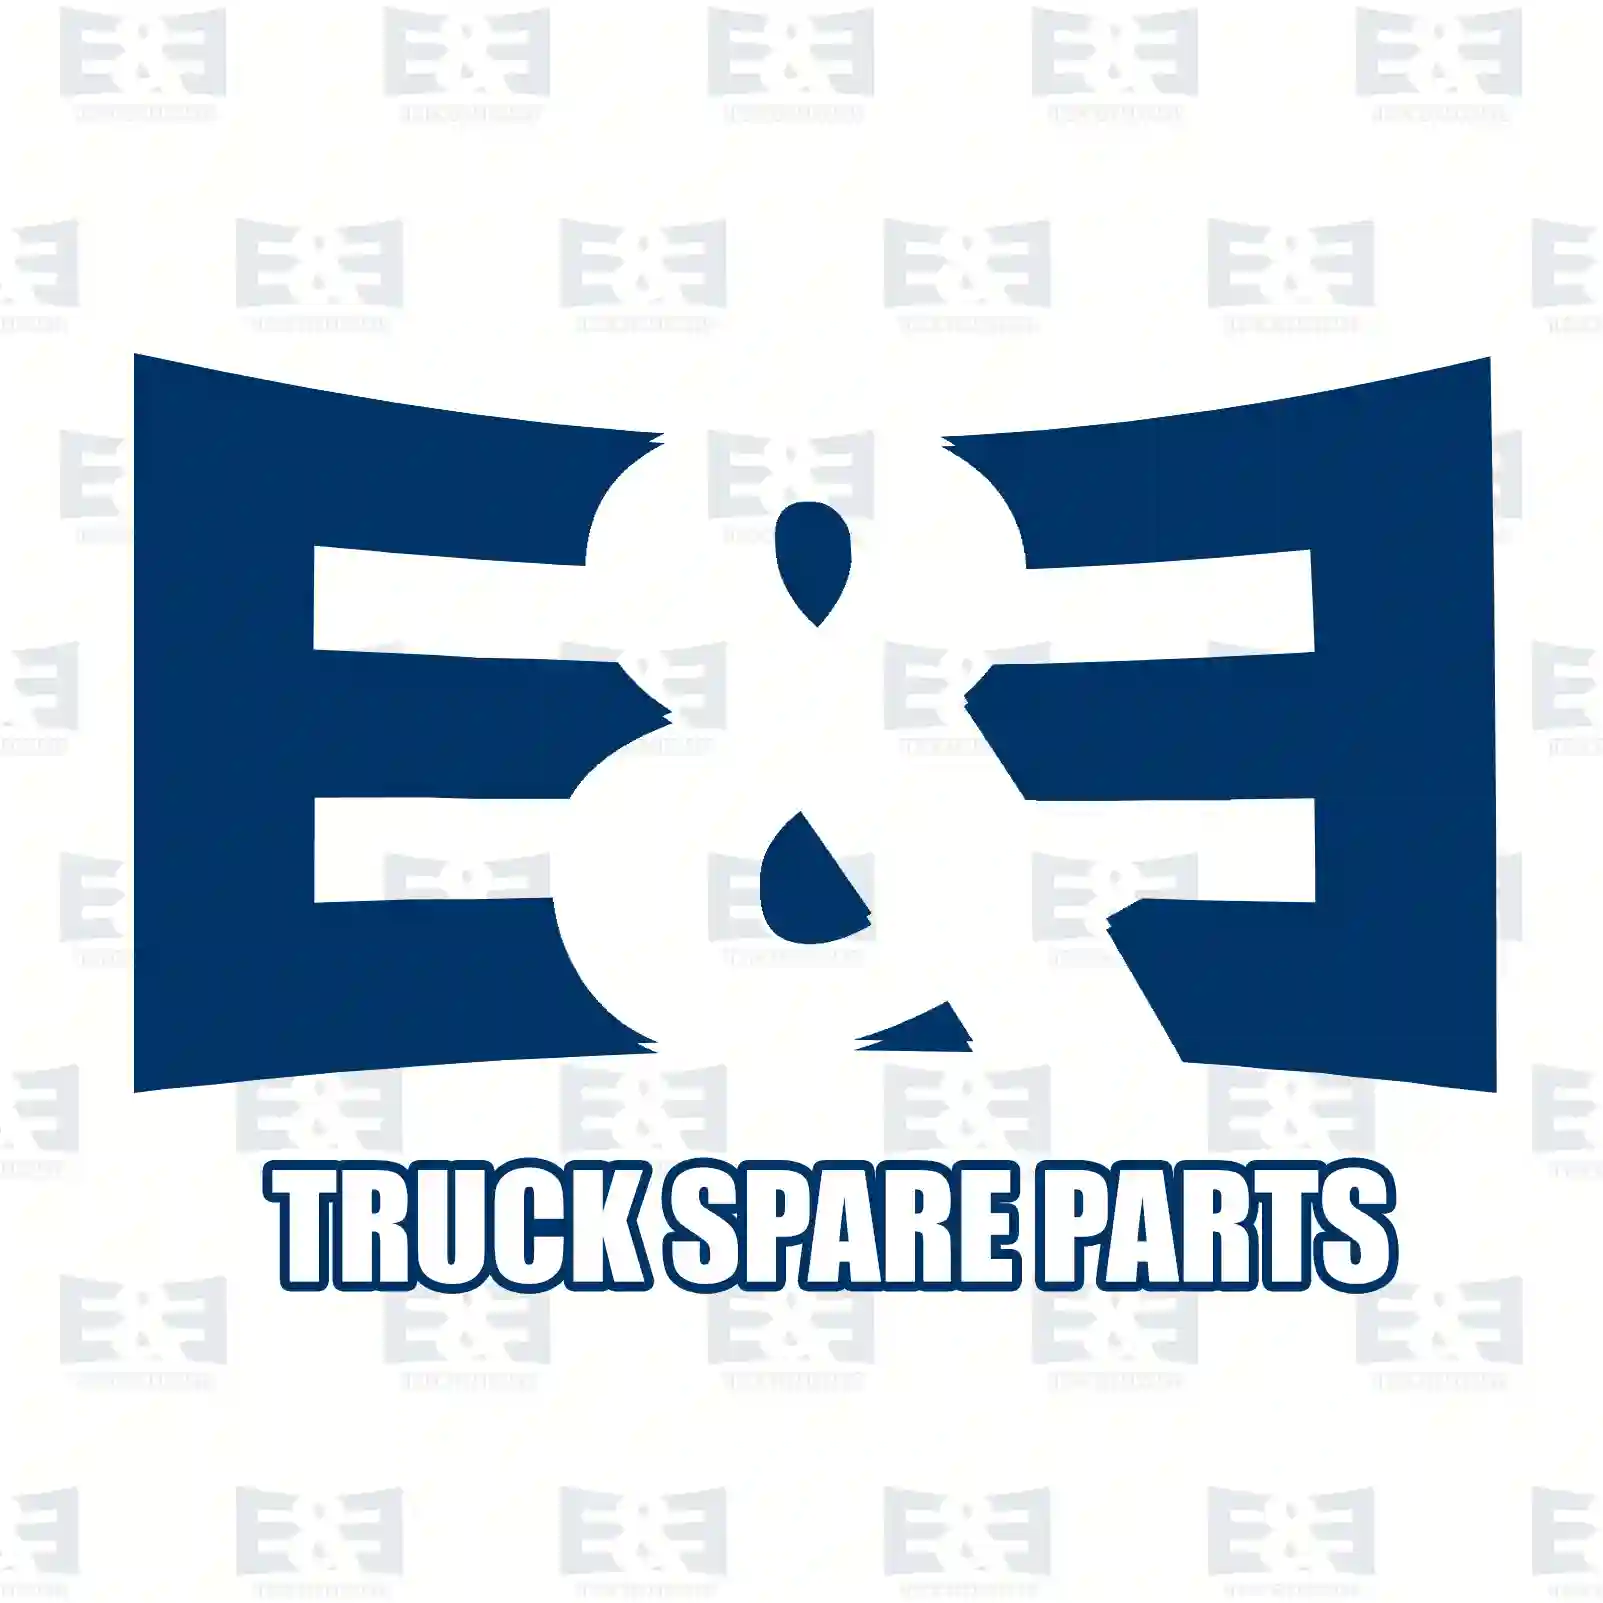 V-belt kit, 2E2286365, 1372671, 06580412224, 06580422224, 06580432224, 06580462224, 06580472224, 06580722242, 06580732242, 51968206037, 51968206056, 967184 ||  2E2286365 E&E Truck Spare Parts | Truck Spare Parts, Auotomotive Spare Parts V-belt kit, 2E2286365, 1372671, 06580412224, 06580422224, 06580432224, 06580462224, 06580472224, 06580722242, 06580732242, 51968206037, 51968206056, 967184 ||  2E2286365 E&E Truck Spare Parts | Truck Spare Parts, Auotomotive Spare Parts